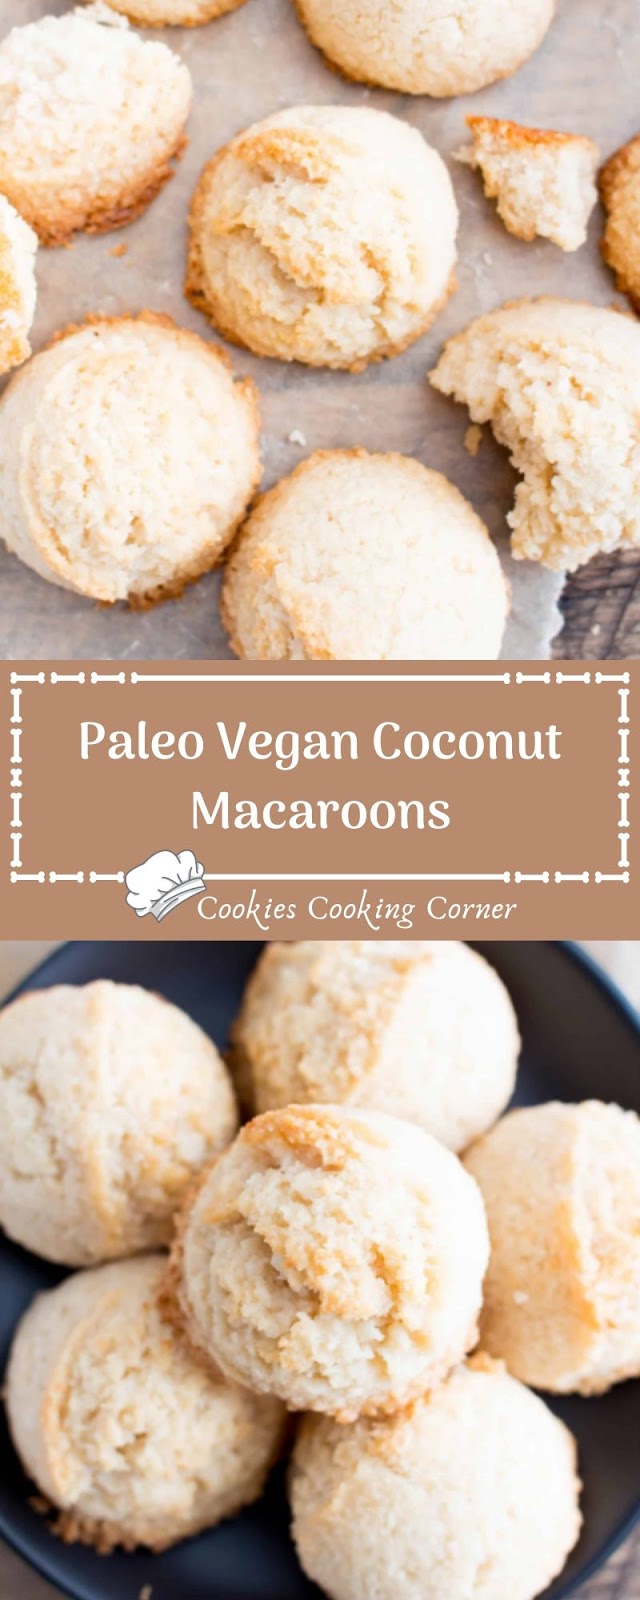 Paleo Vegan Coconut Macaroons